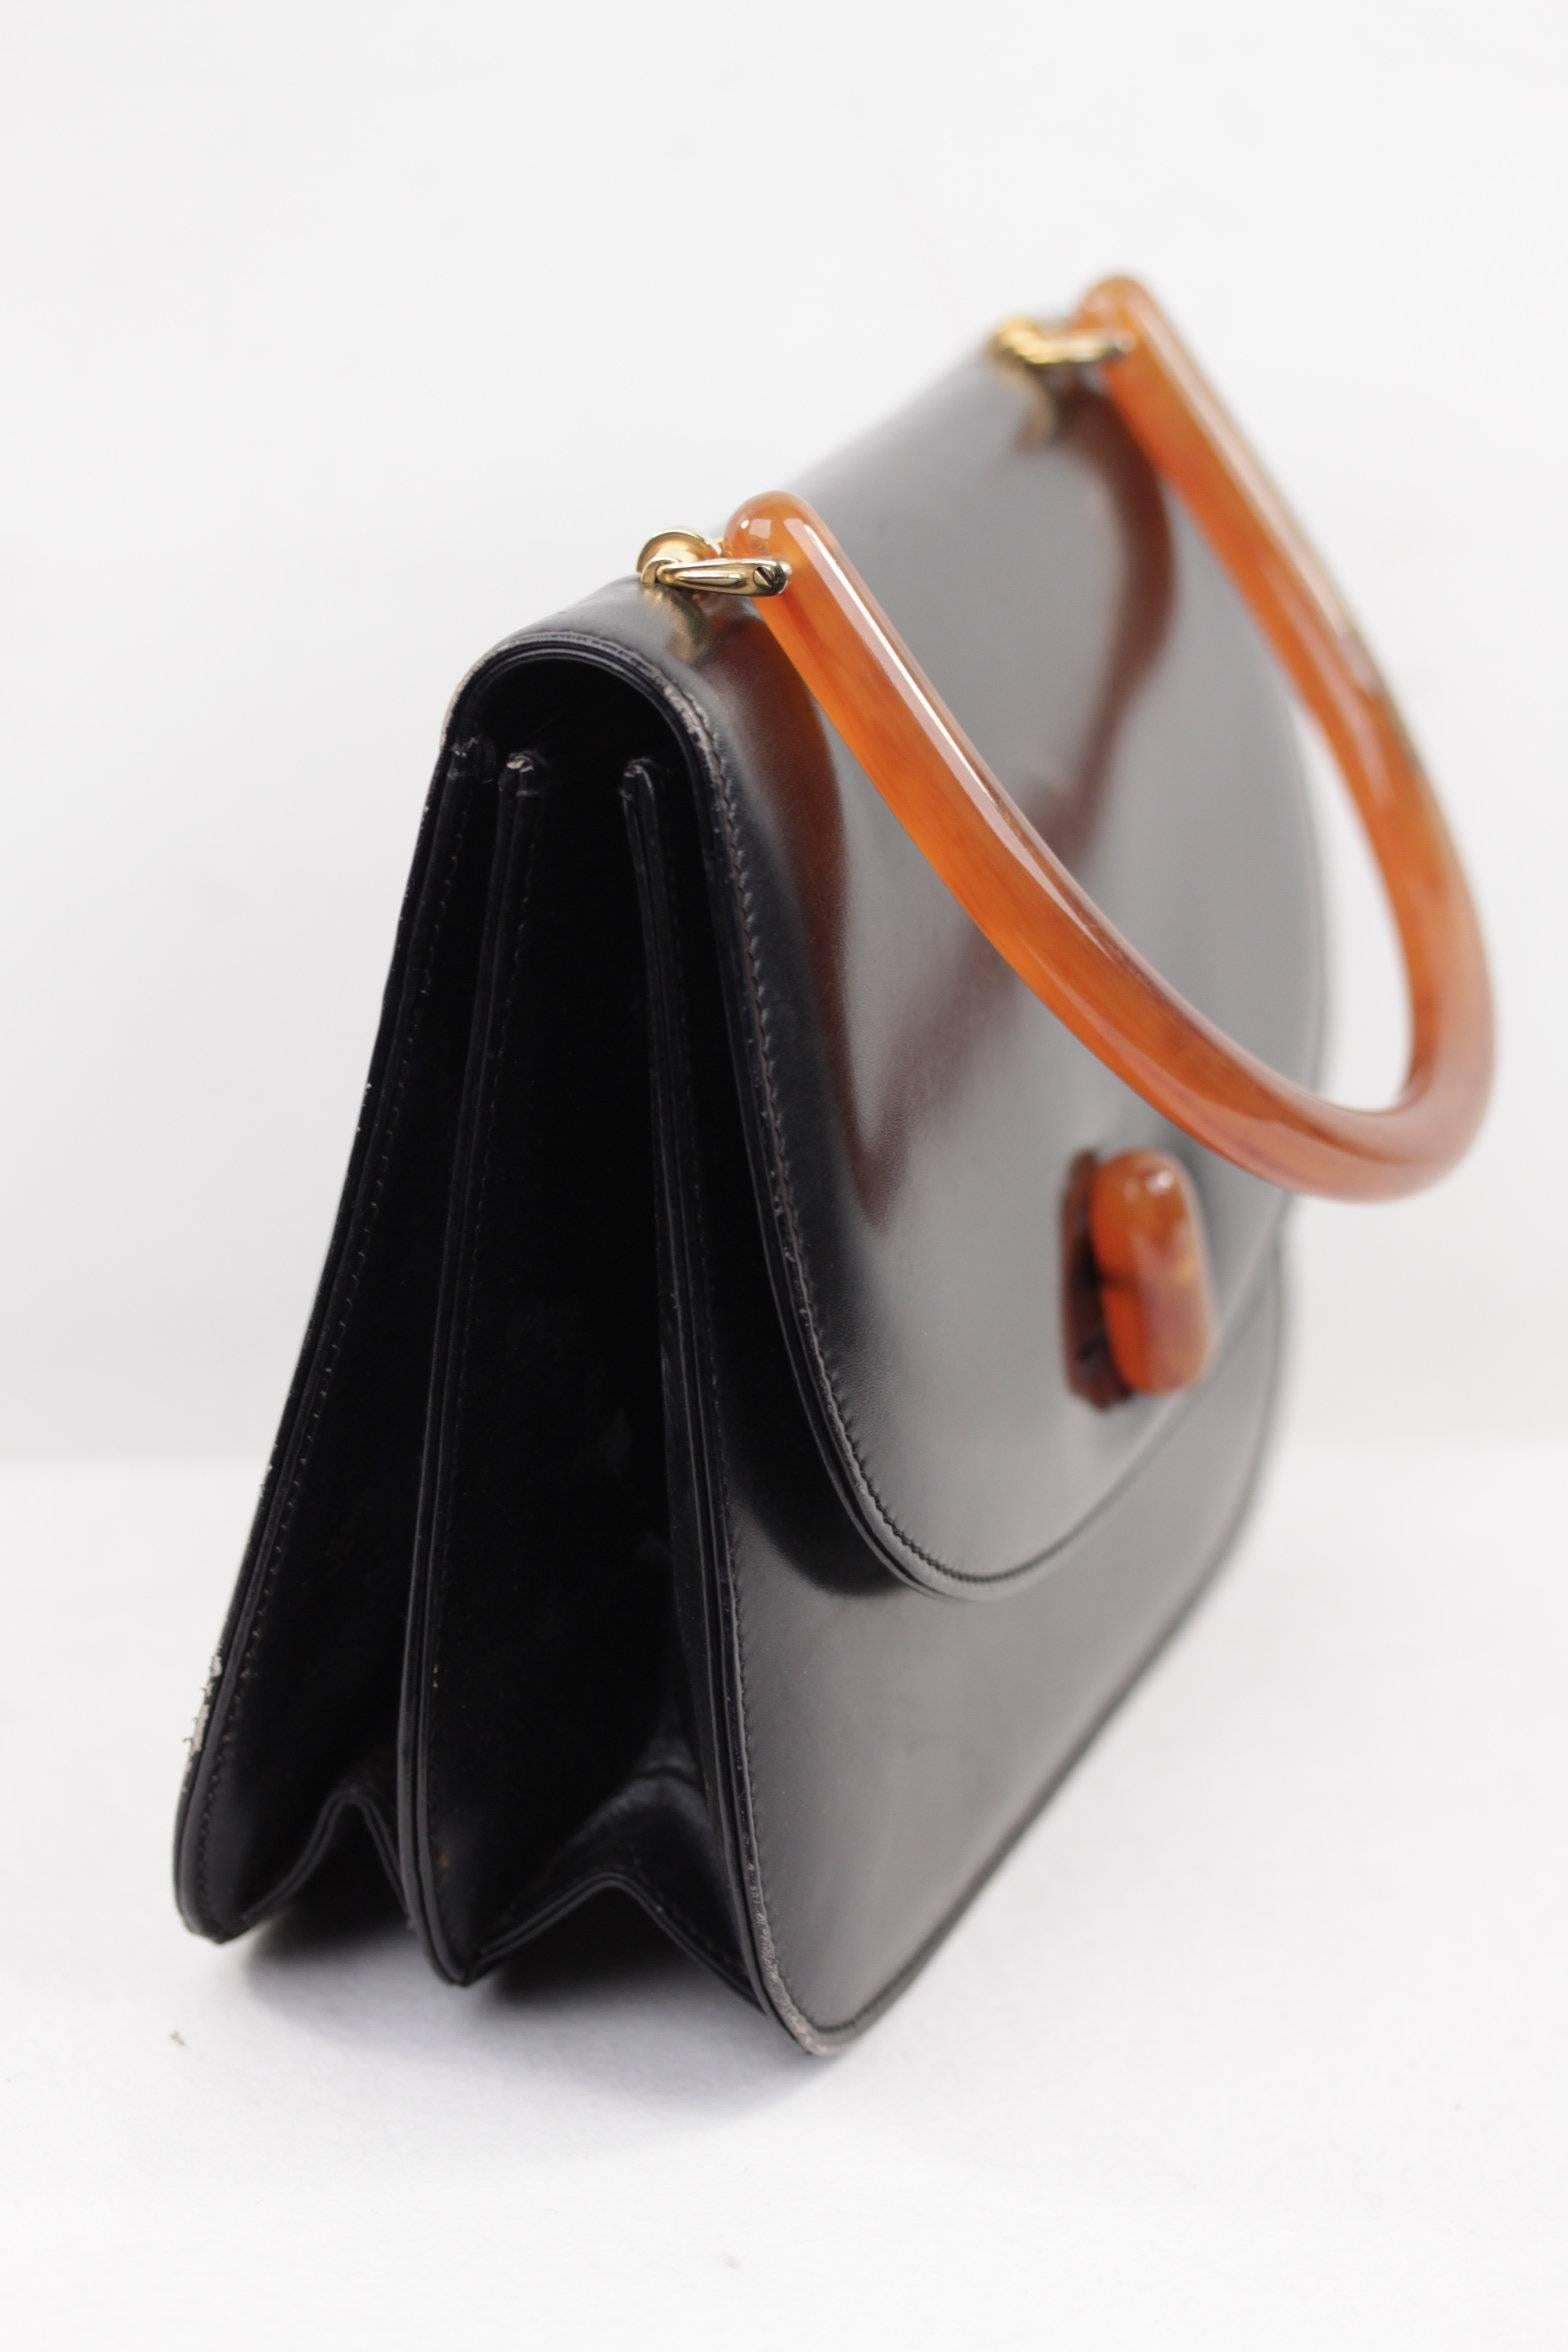 GUCCI Italian VINTAGE Black Leather HANDBAG Flap Purse w/ BAKELITE HANDLE Rare 3